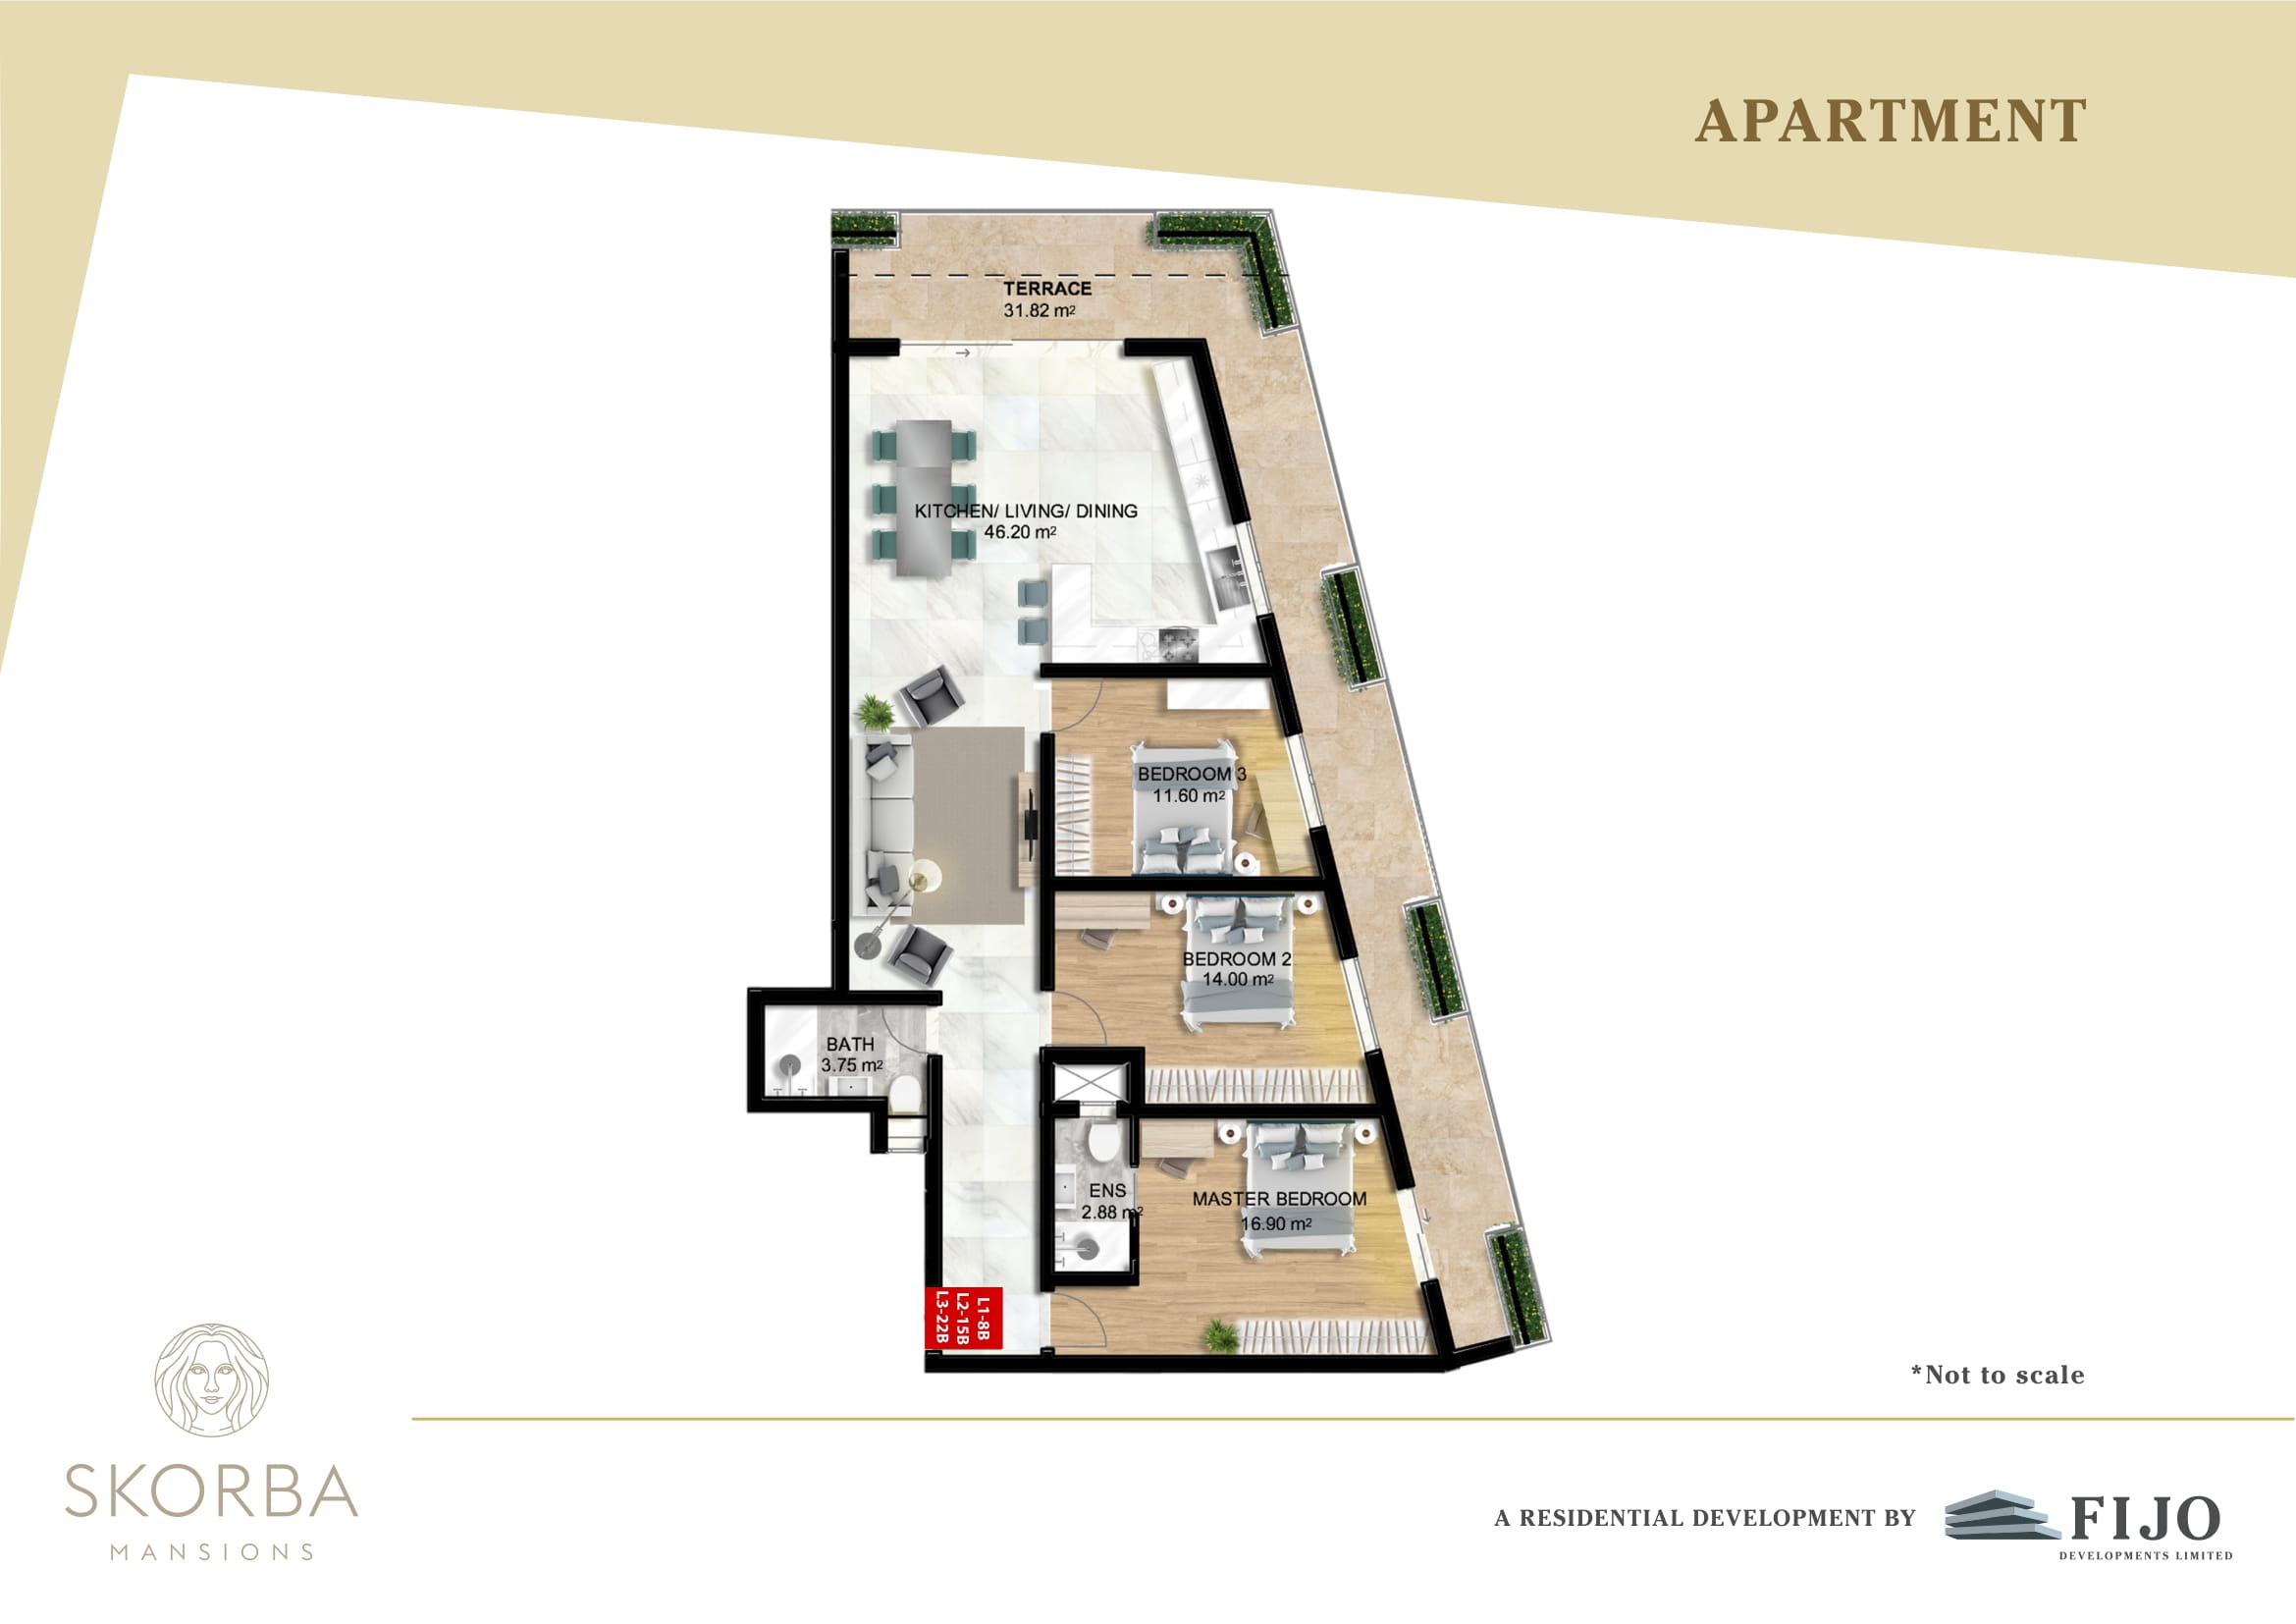 Skorba Mansions Plans LEVEL 1,2,3 APARTMENT 8B-1